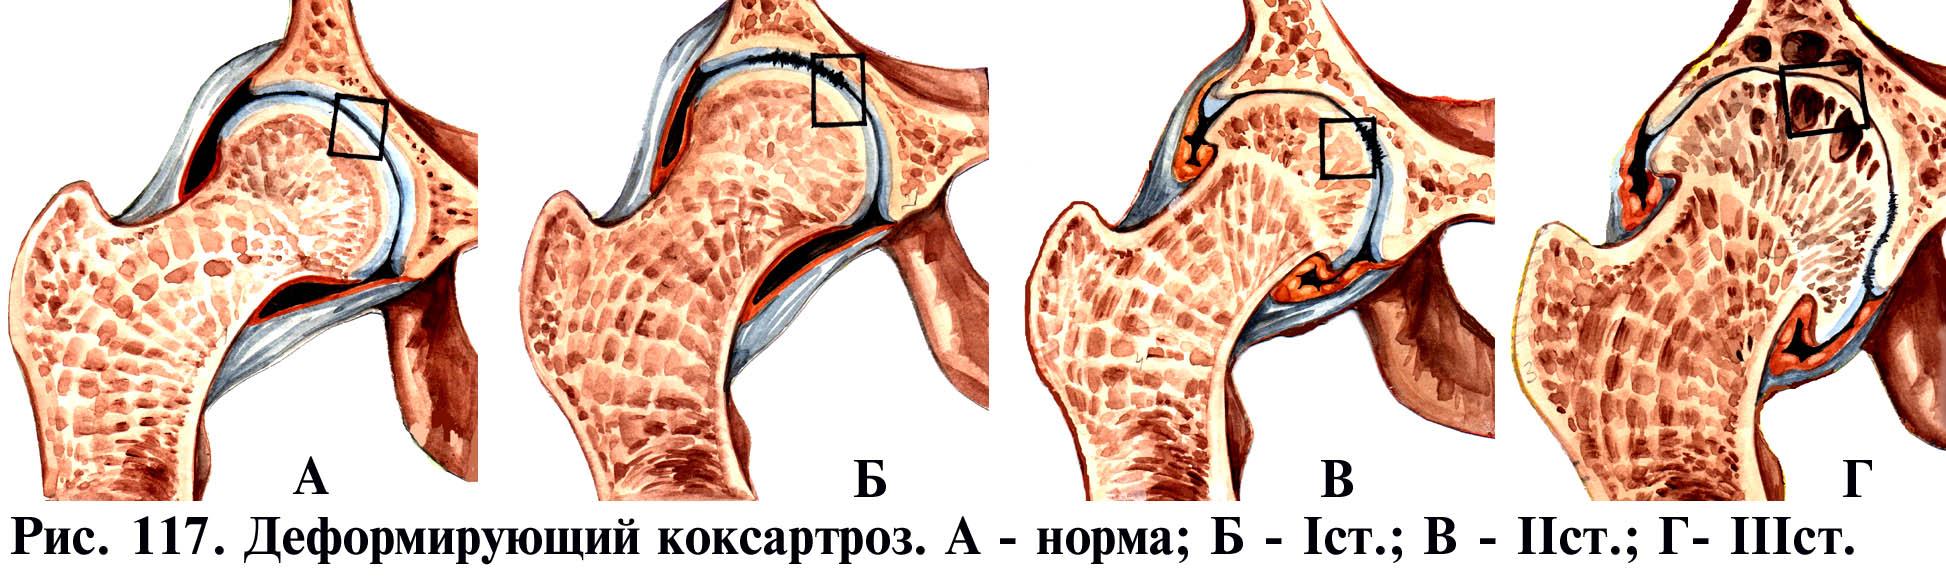 Классификация деформирующего артроза коленного сустава thumbnail